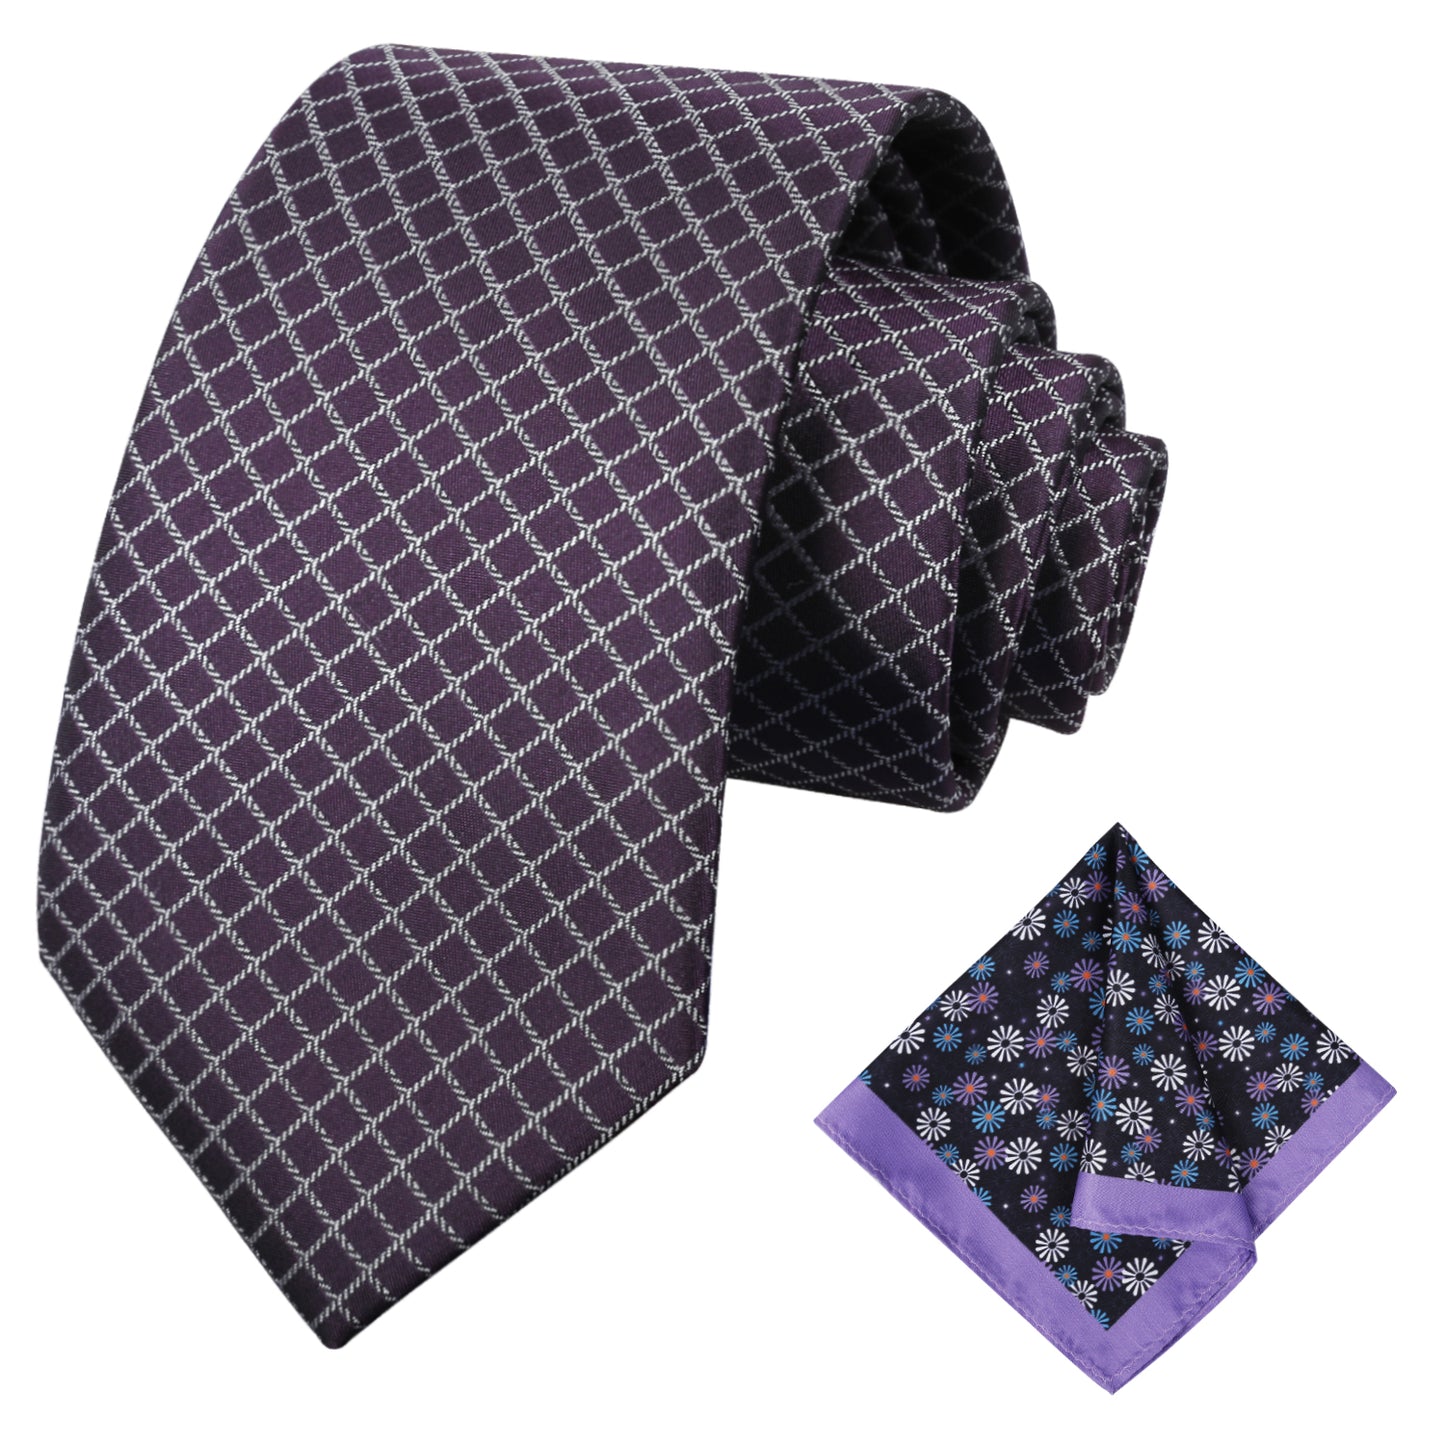 Men's Checkered Tie 3.15inch Necktie and Printed Floral Handkerchief Set, 122